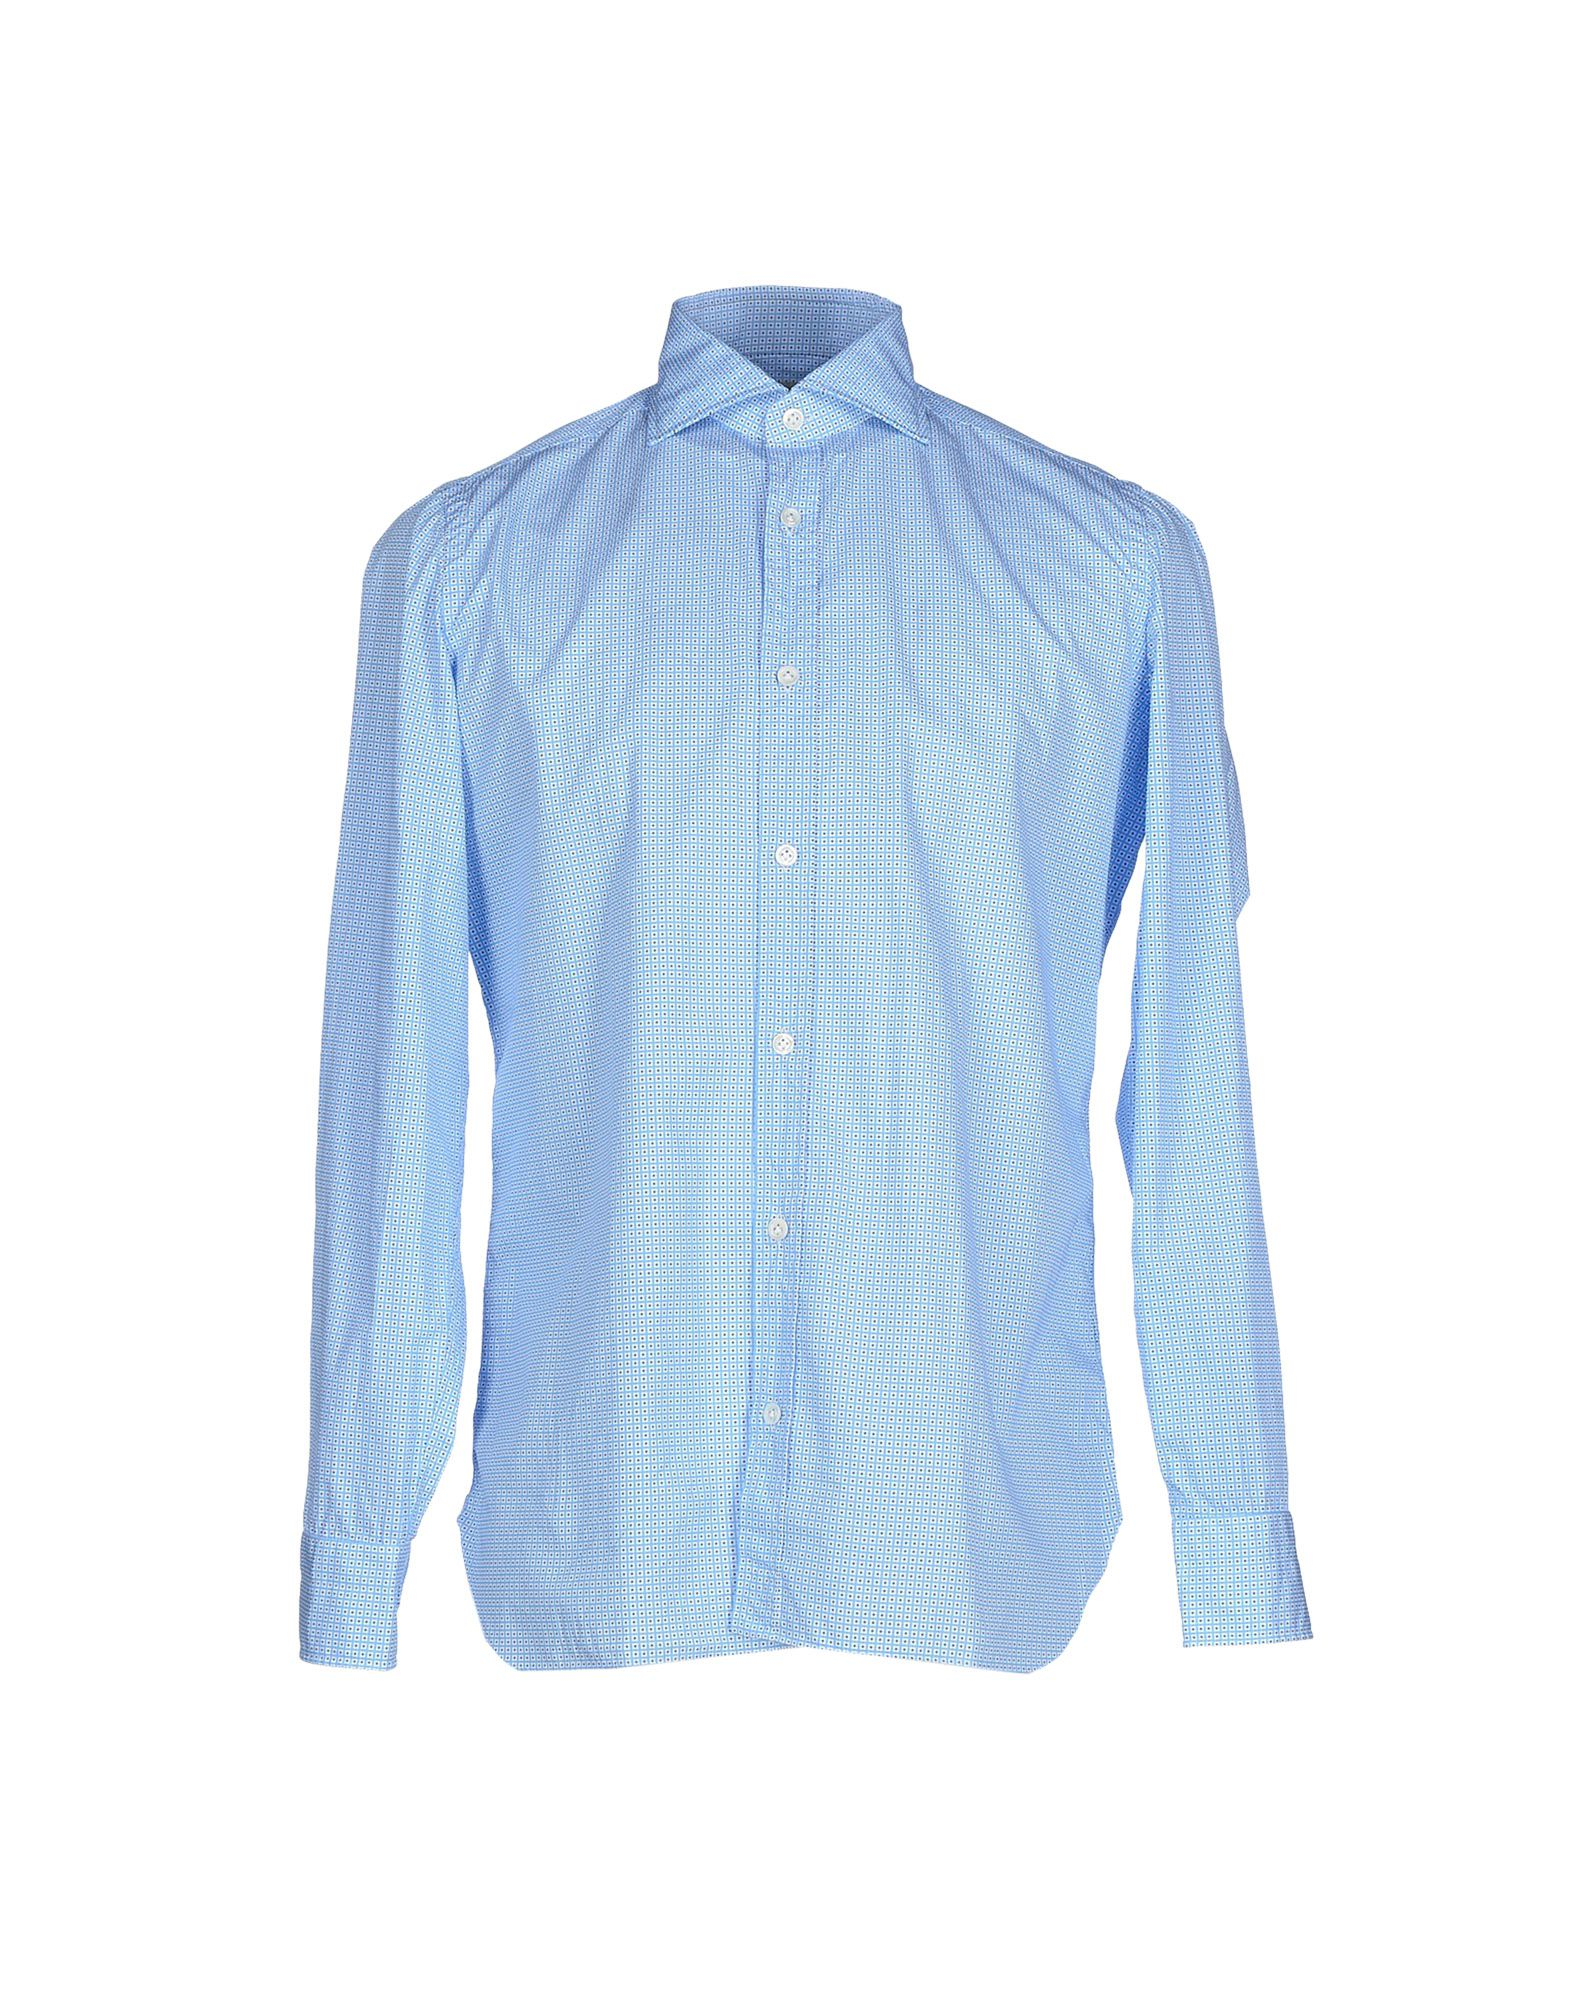 Luigi borrelli napoli Shirt in Blue for Men (Azure) - Save 31% | Lyst